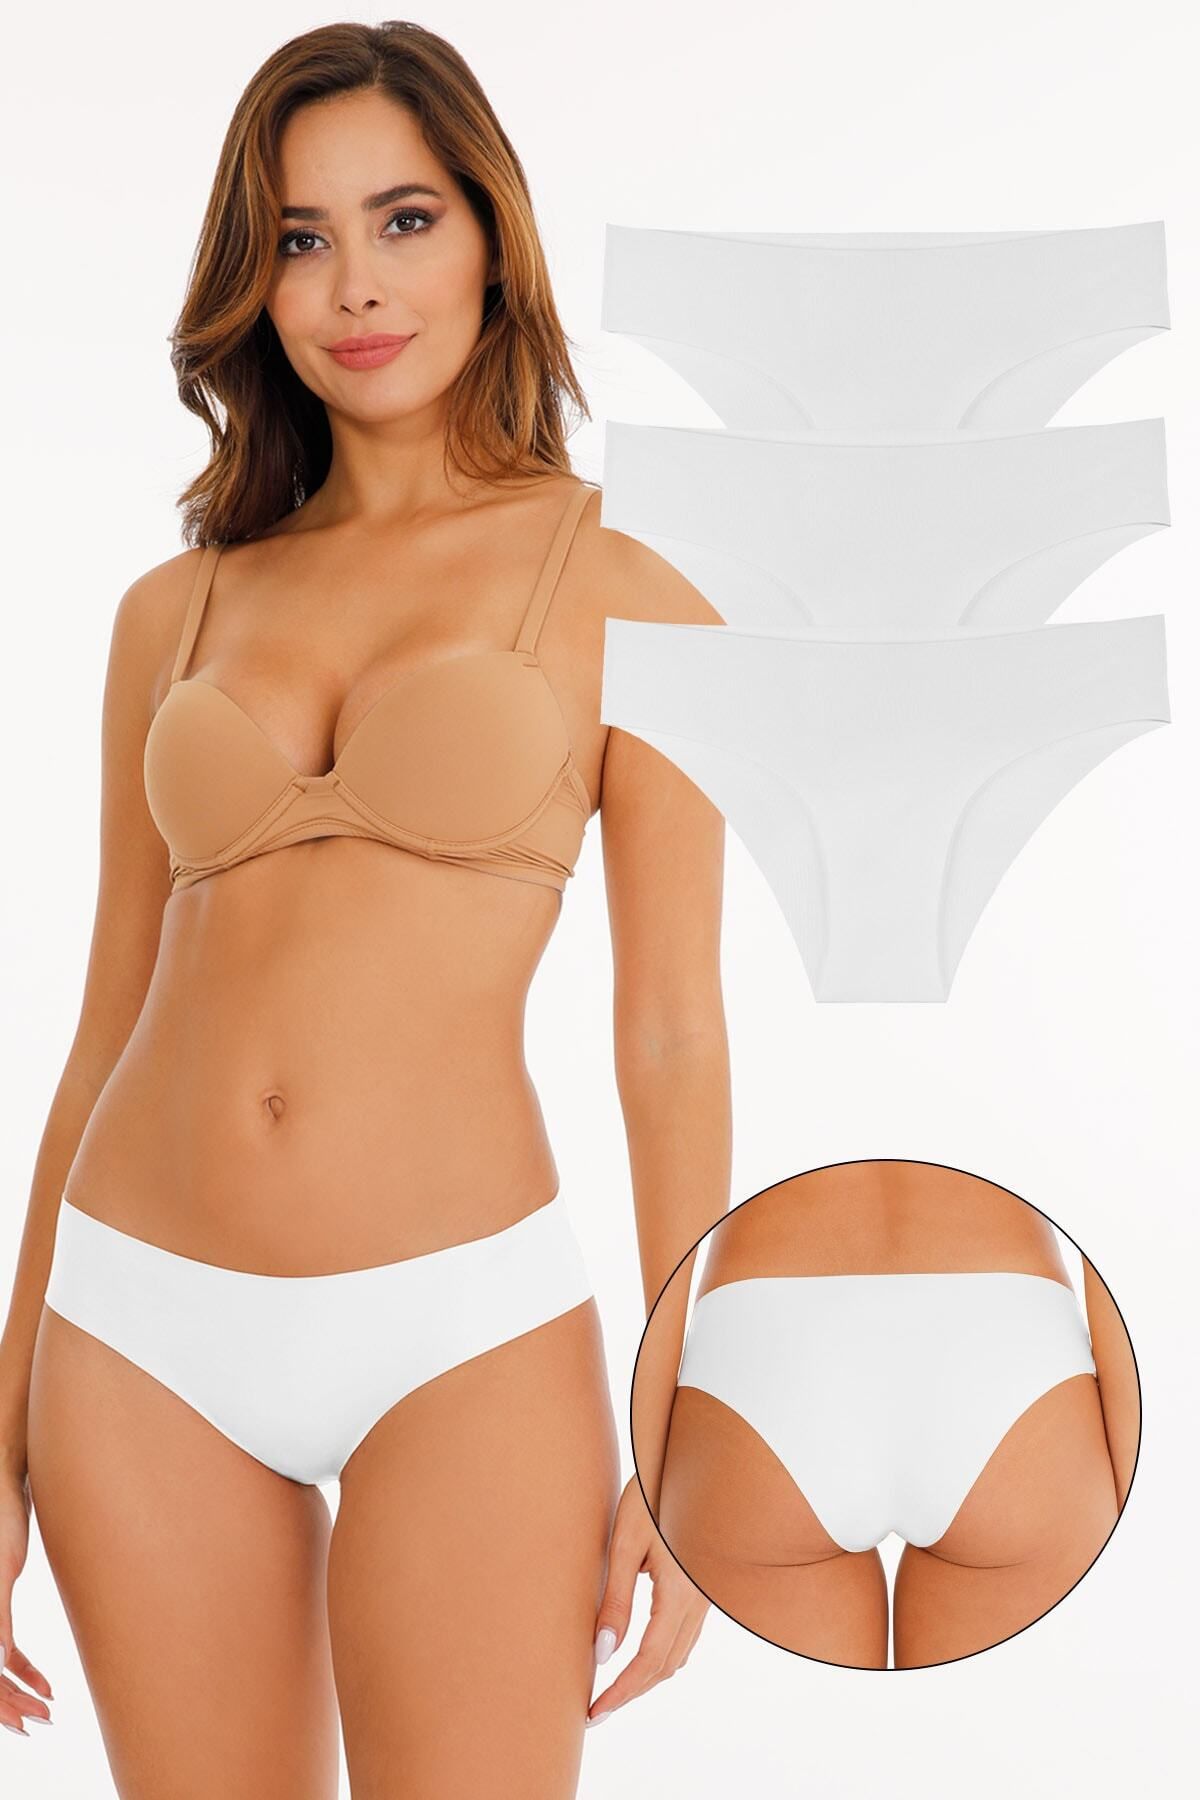 Sensu Women's Laser Cut Lycra Panties 3 Pack Set - Trendyol